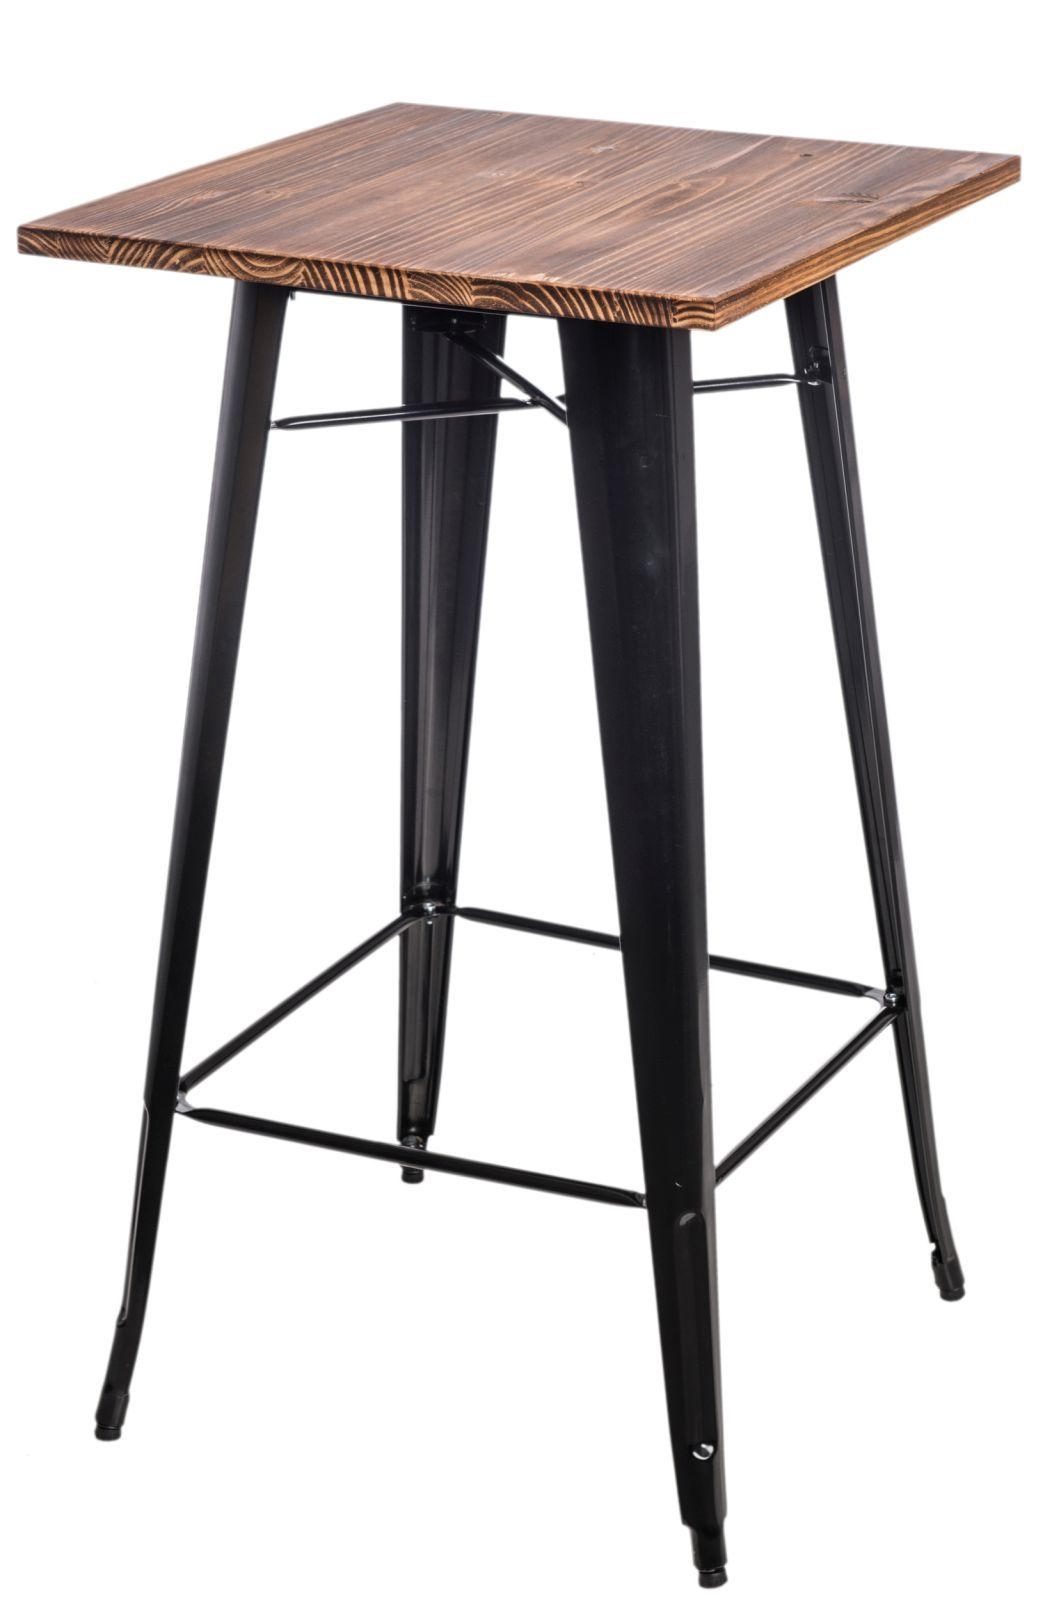  Stôl barový Paris Wood čierny sosna - mobler.sk